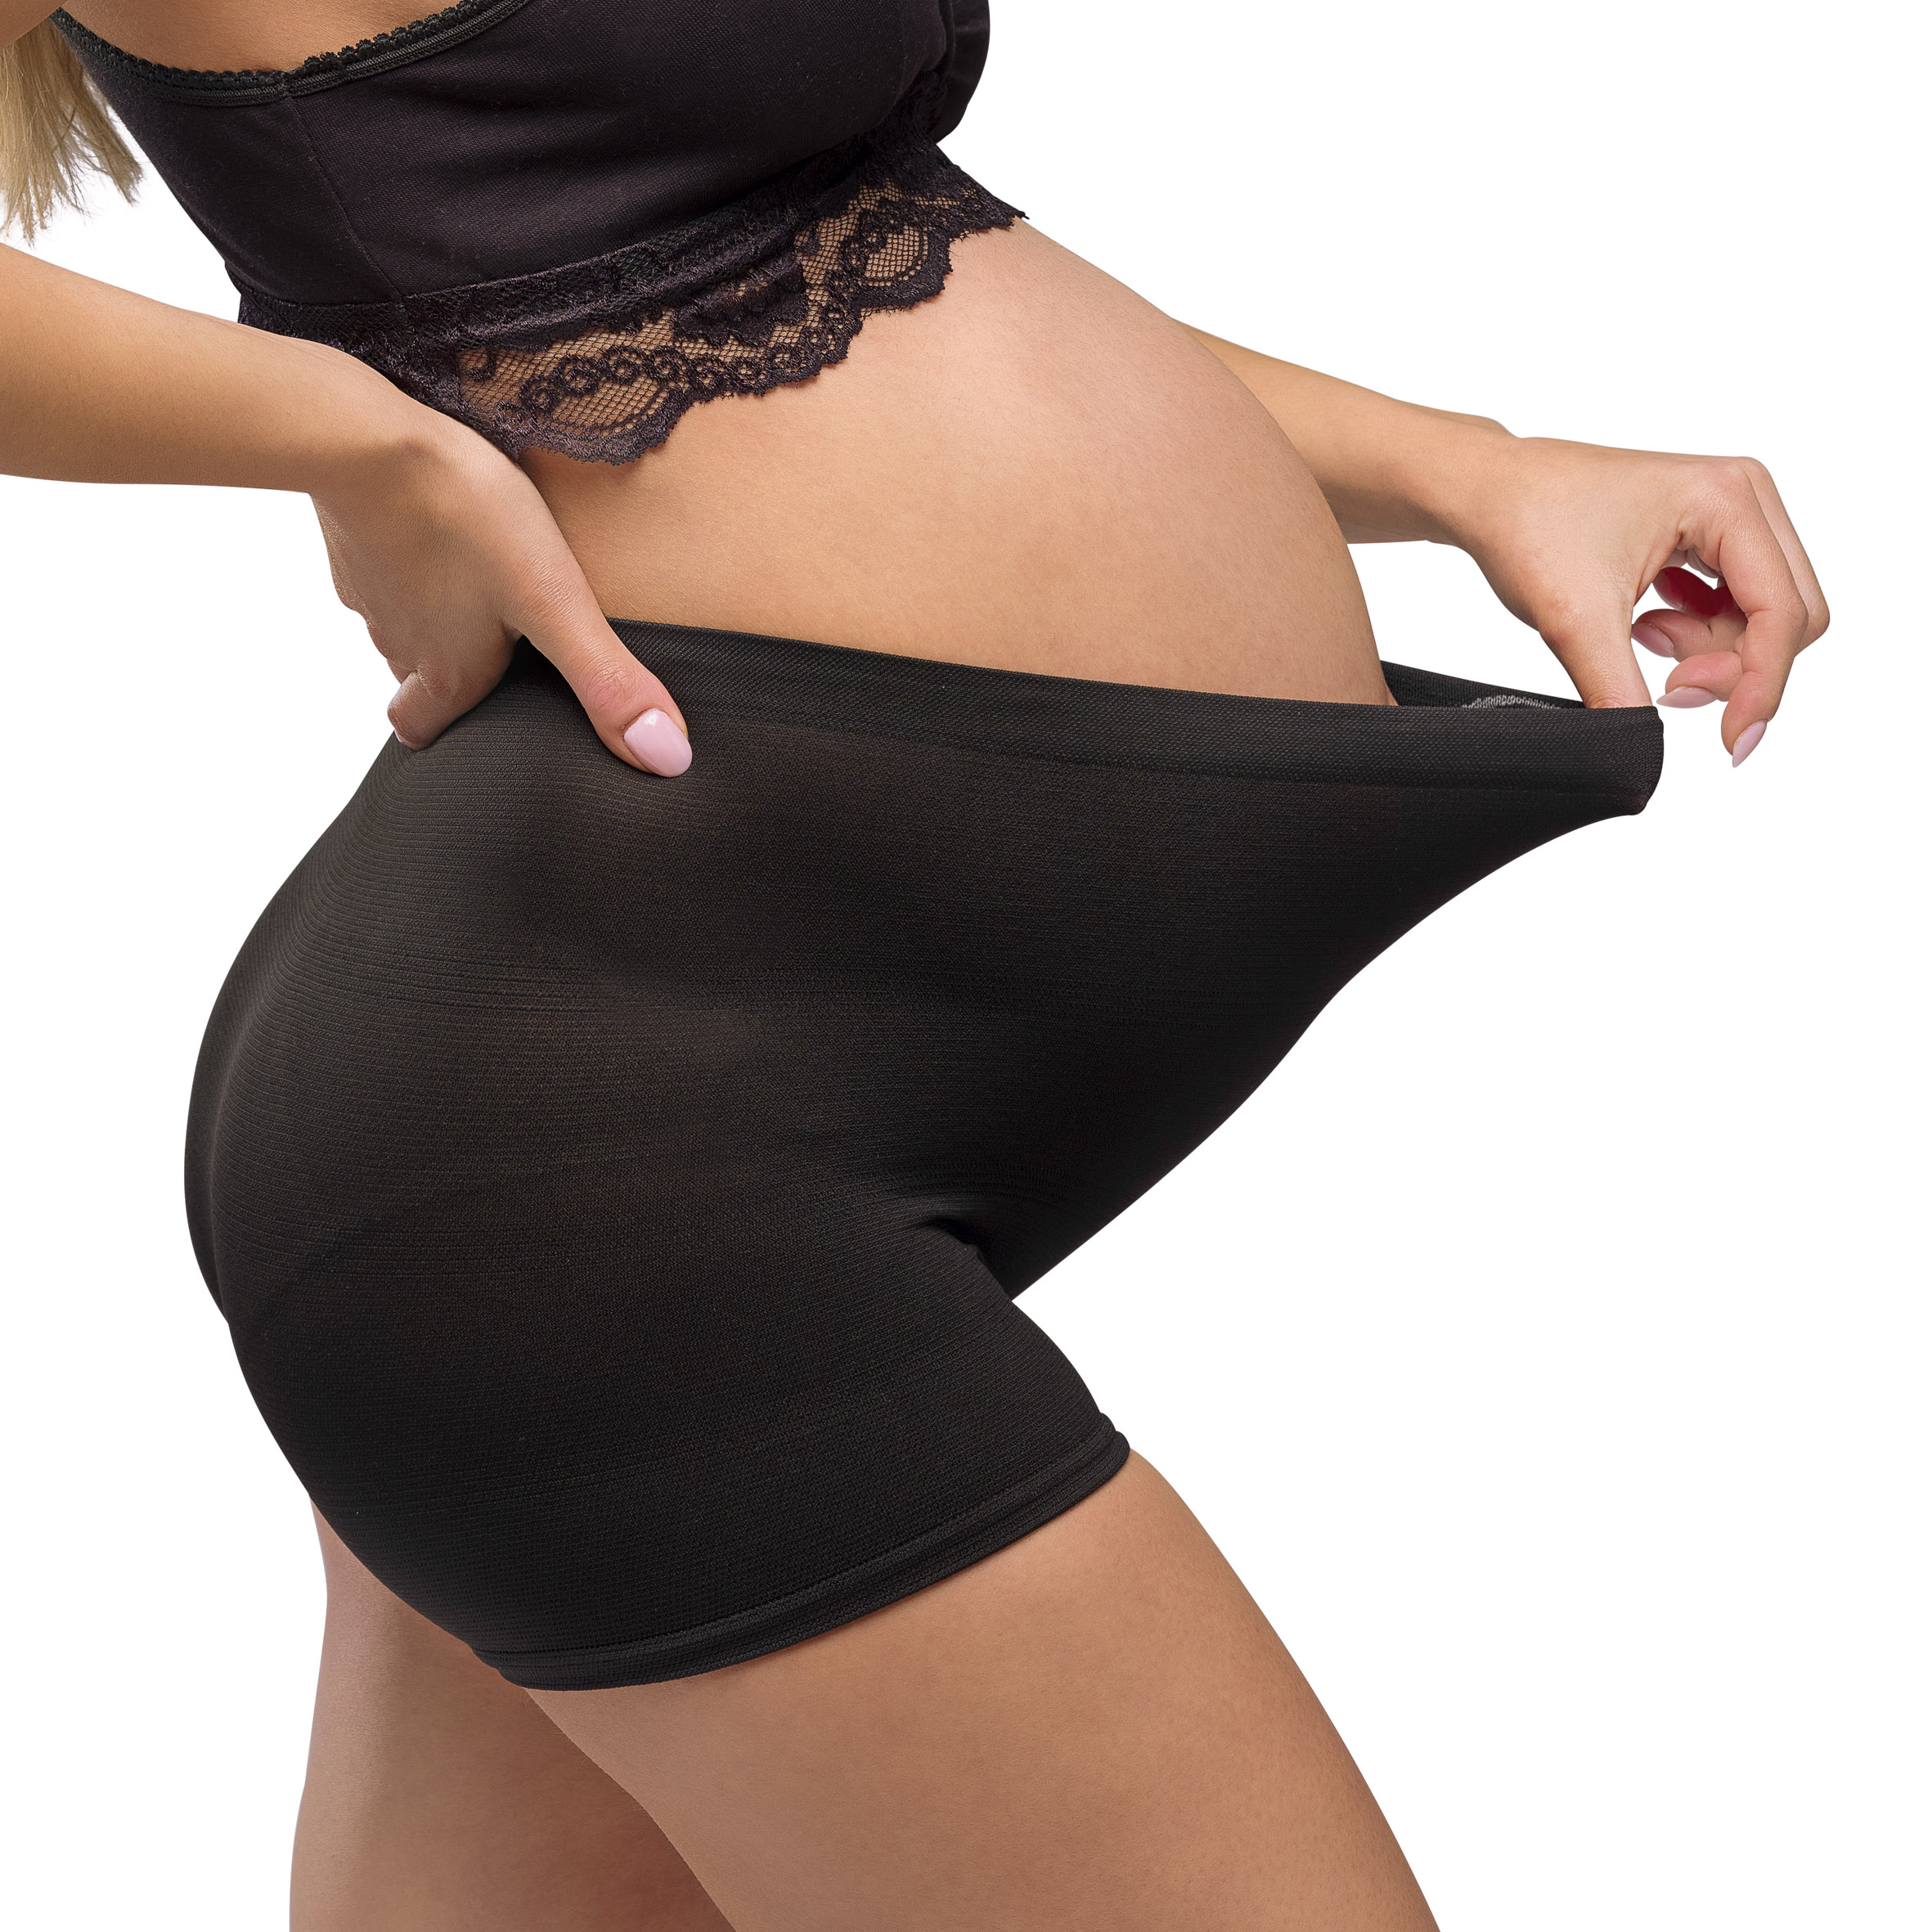 Unisex Breathable SPA Massage Hospital Panty Maternity Cotton